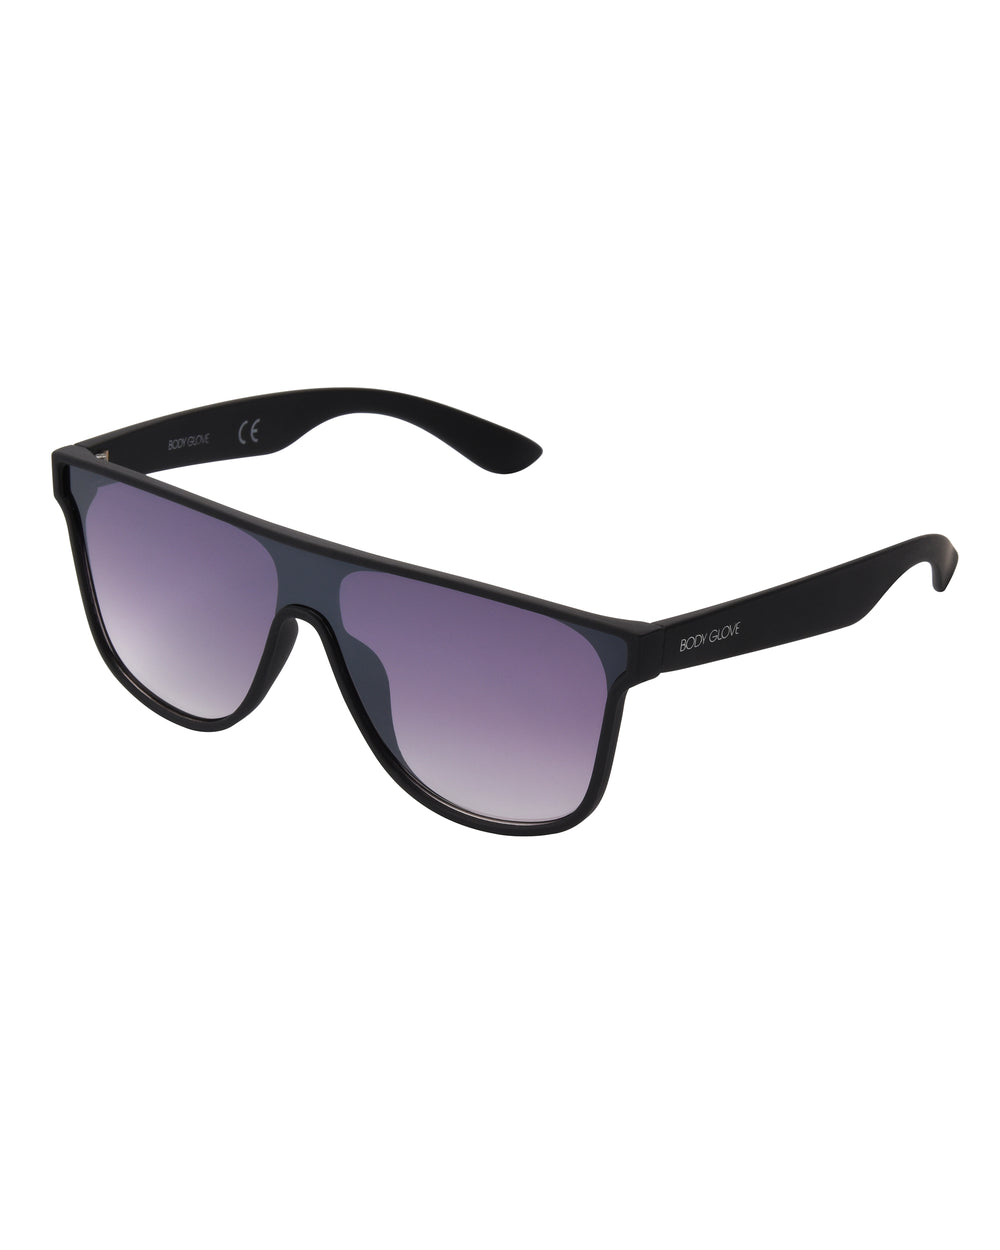 Body Glove Sport Shield Sunglasses BGSPT 2010 YLW 100% UV Protection